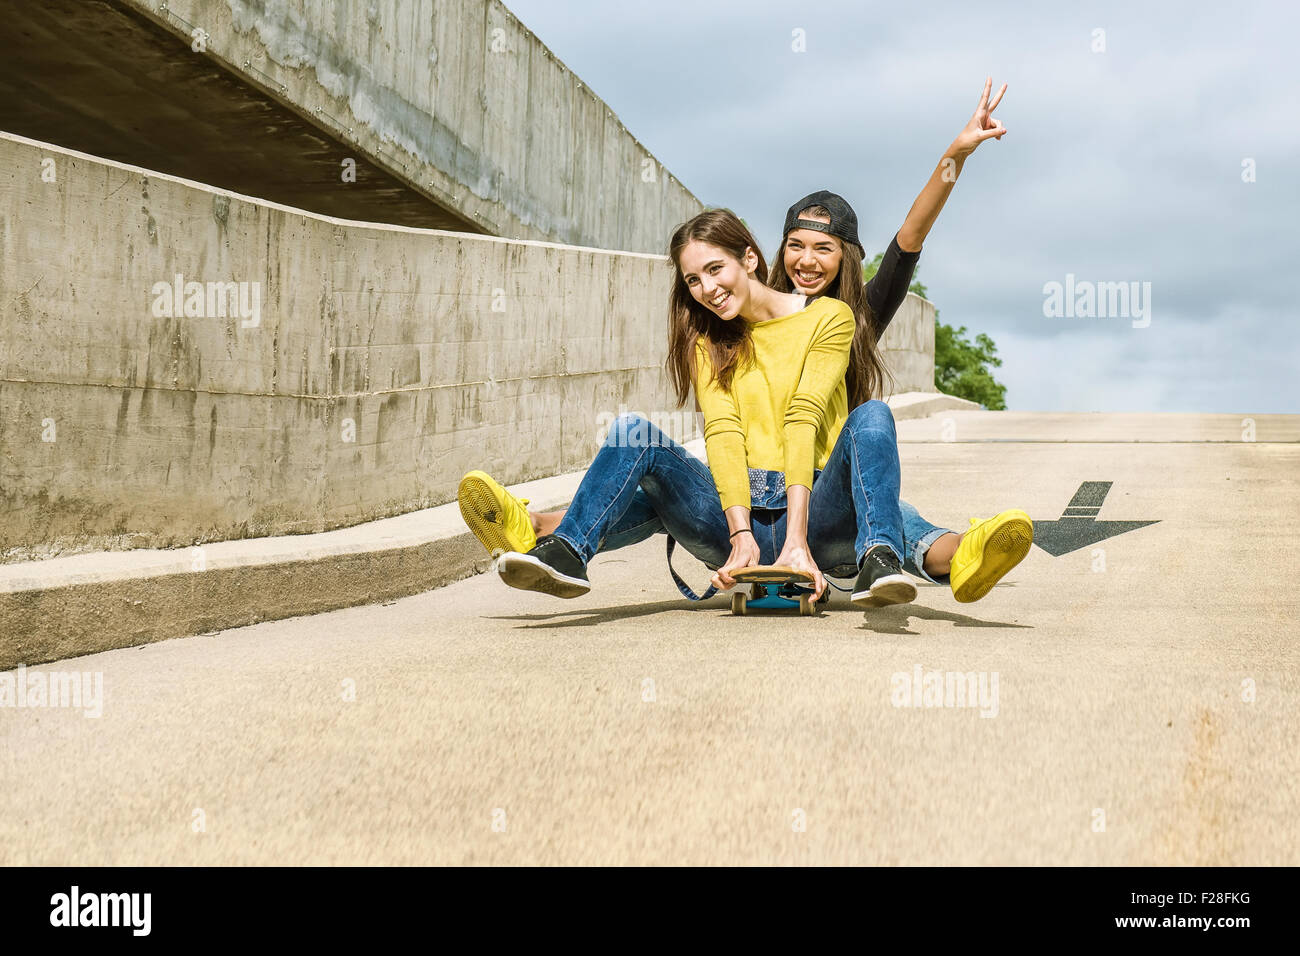 Skateboarder girlfriends roll down the slope Stock Photo